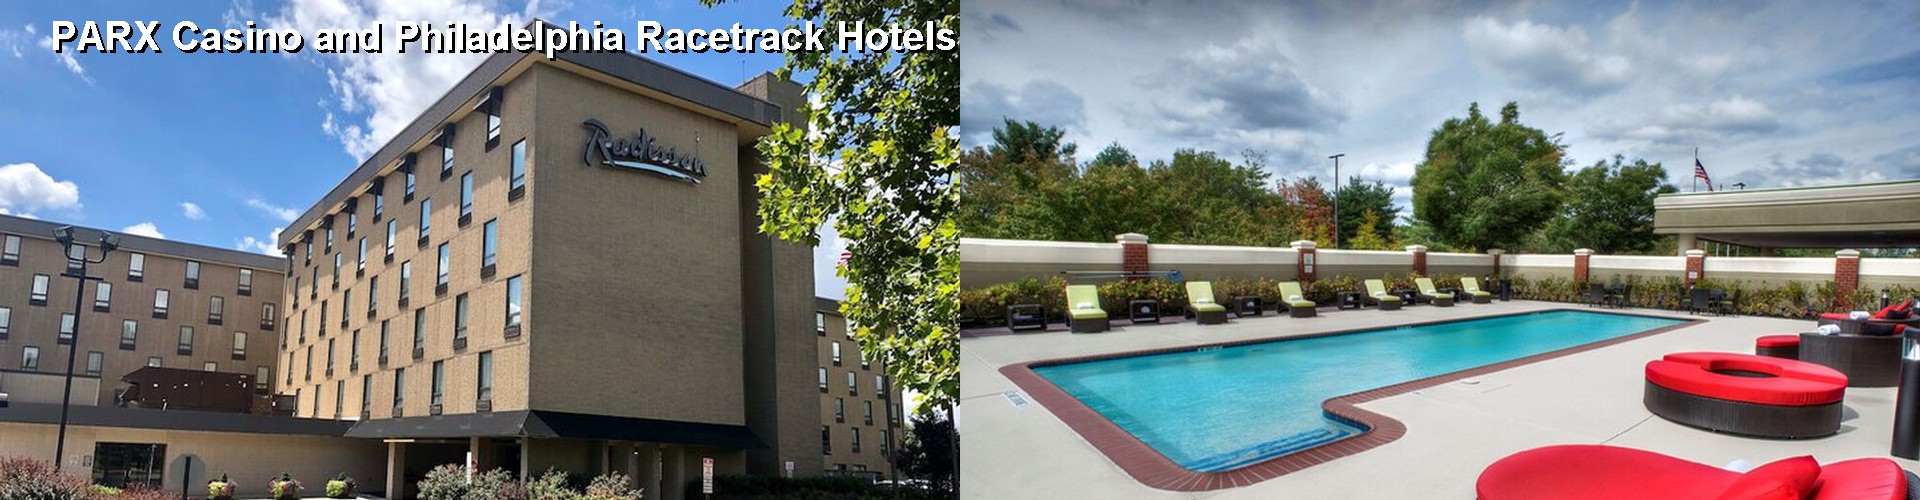 5 Best Hotels near PARX Casino and Philadelphia Racetrack